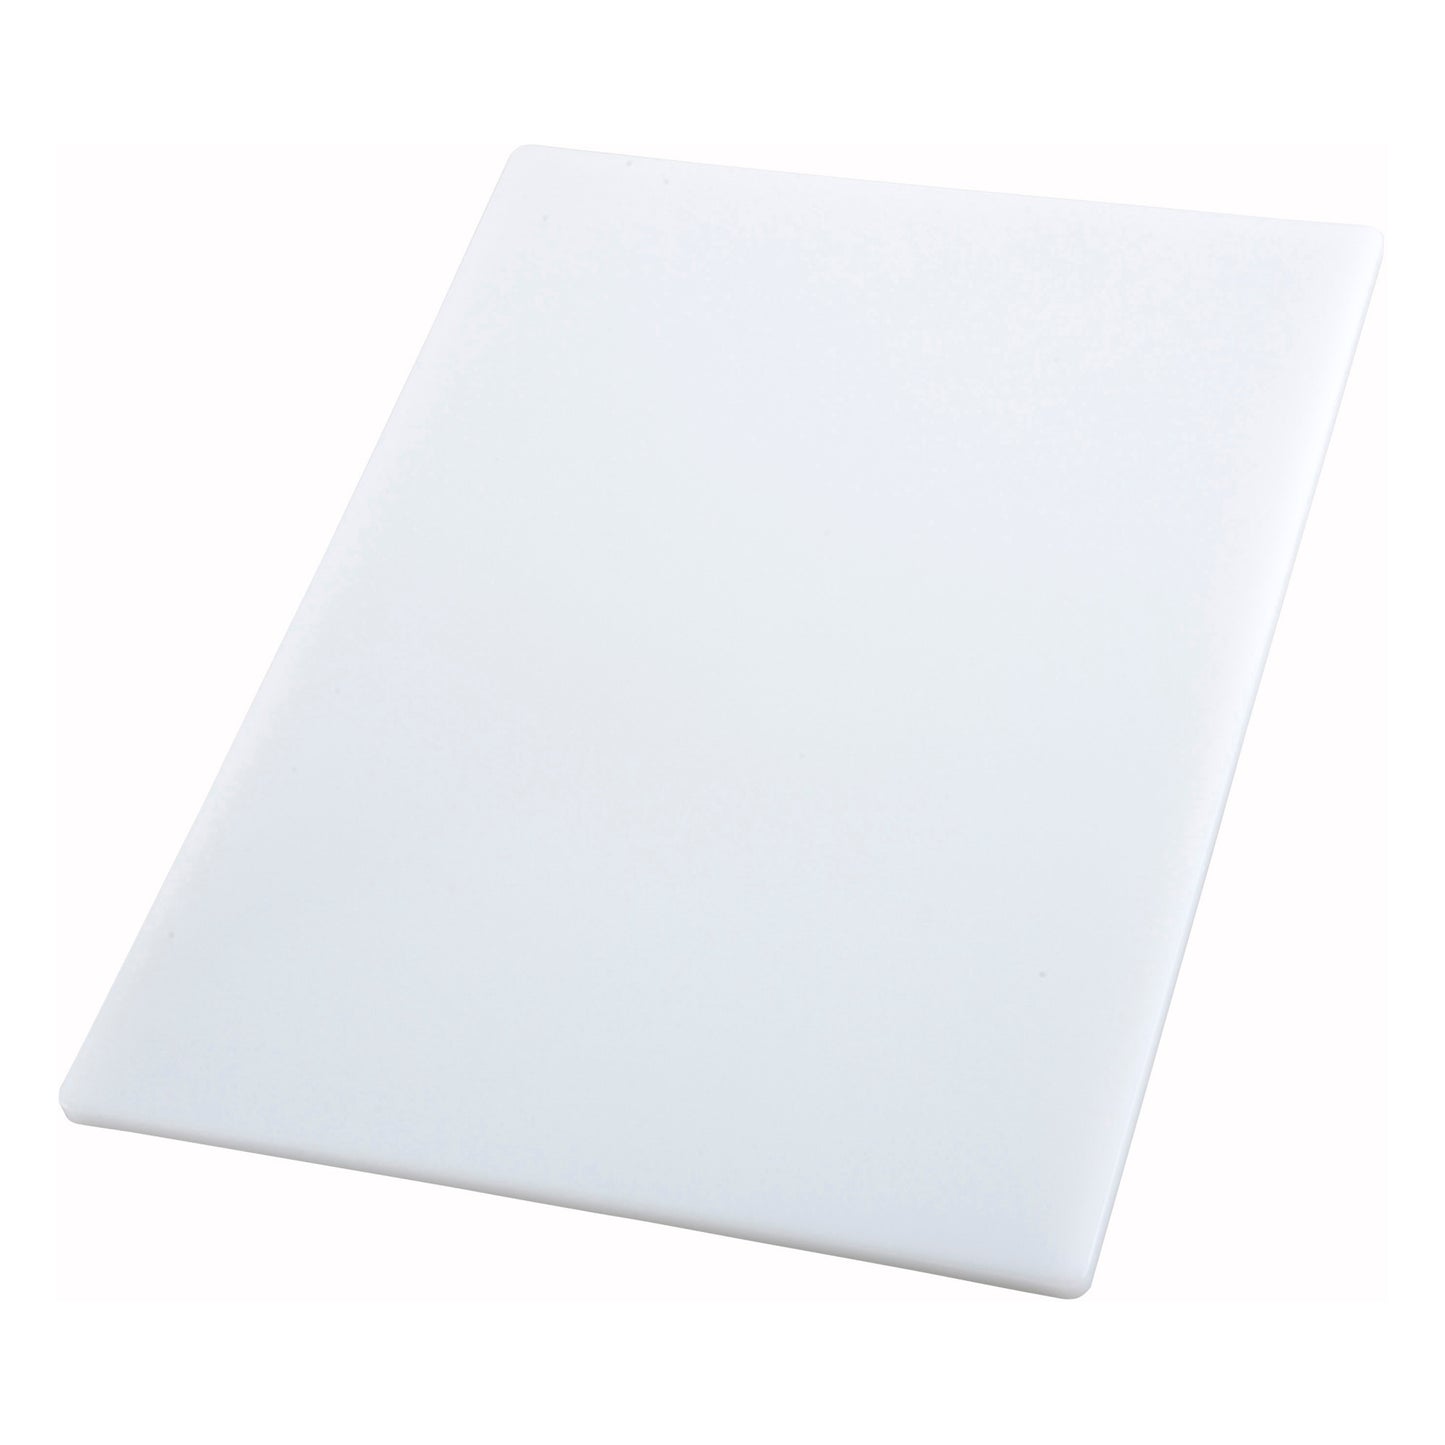 CBWT-1824 - White Rectangular Cutting Board - 18" x 24" x 1/2"